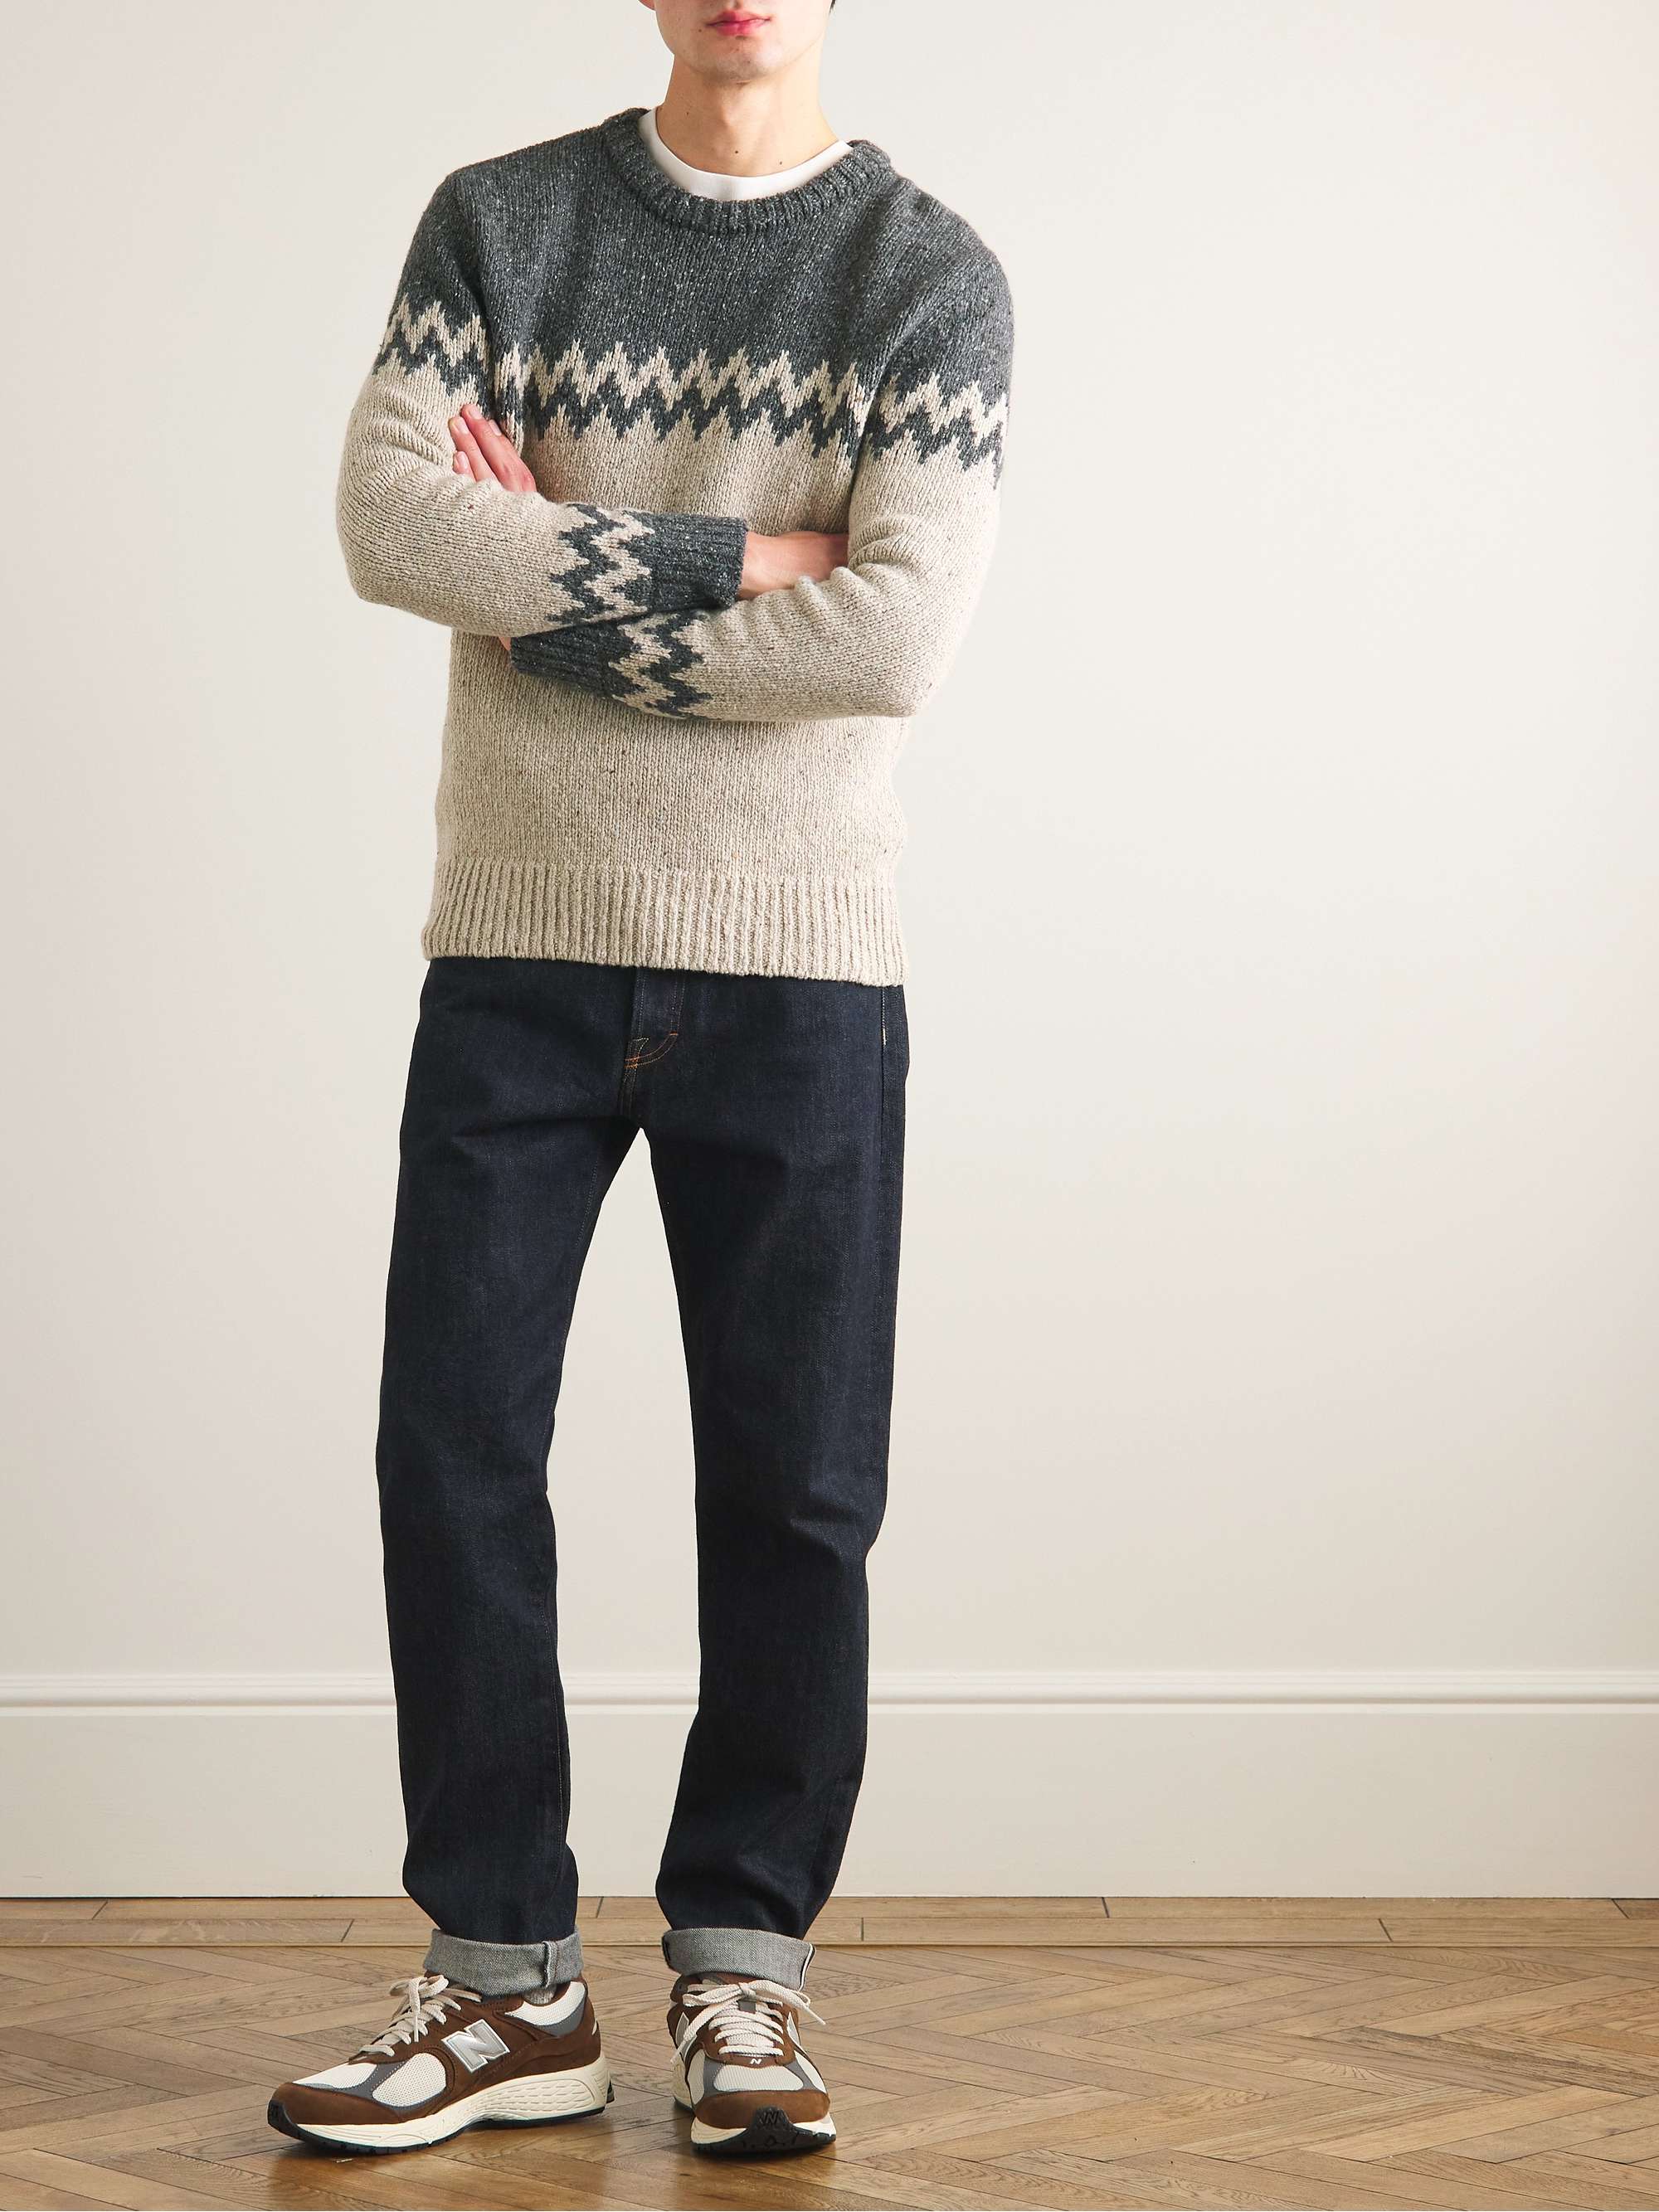 OLIVER SPENCER Blenheim Intarsia-Knit Wool-Blend Sweater